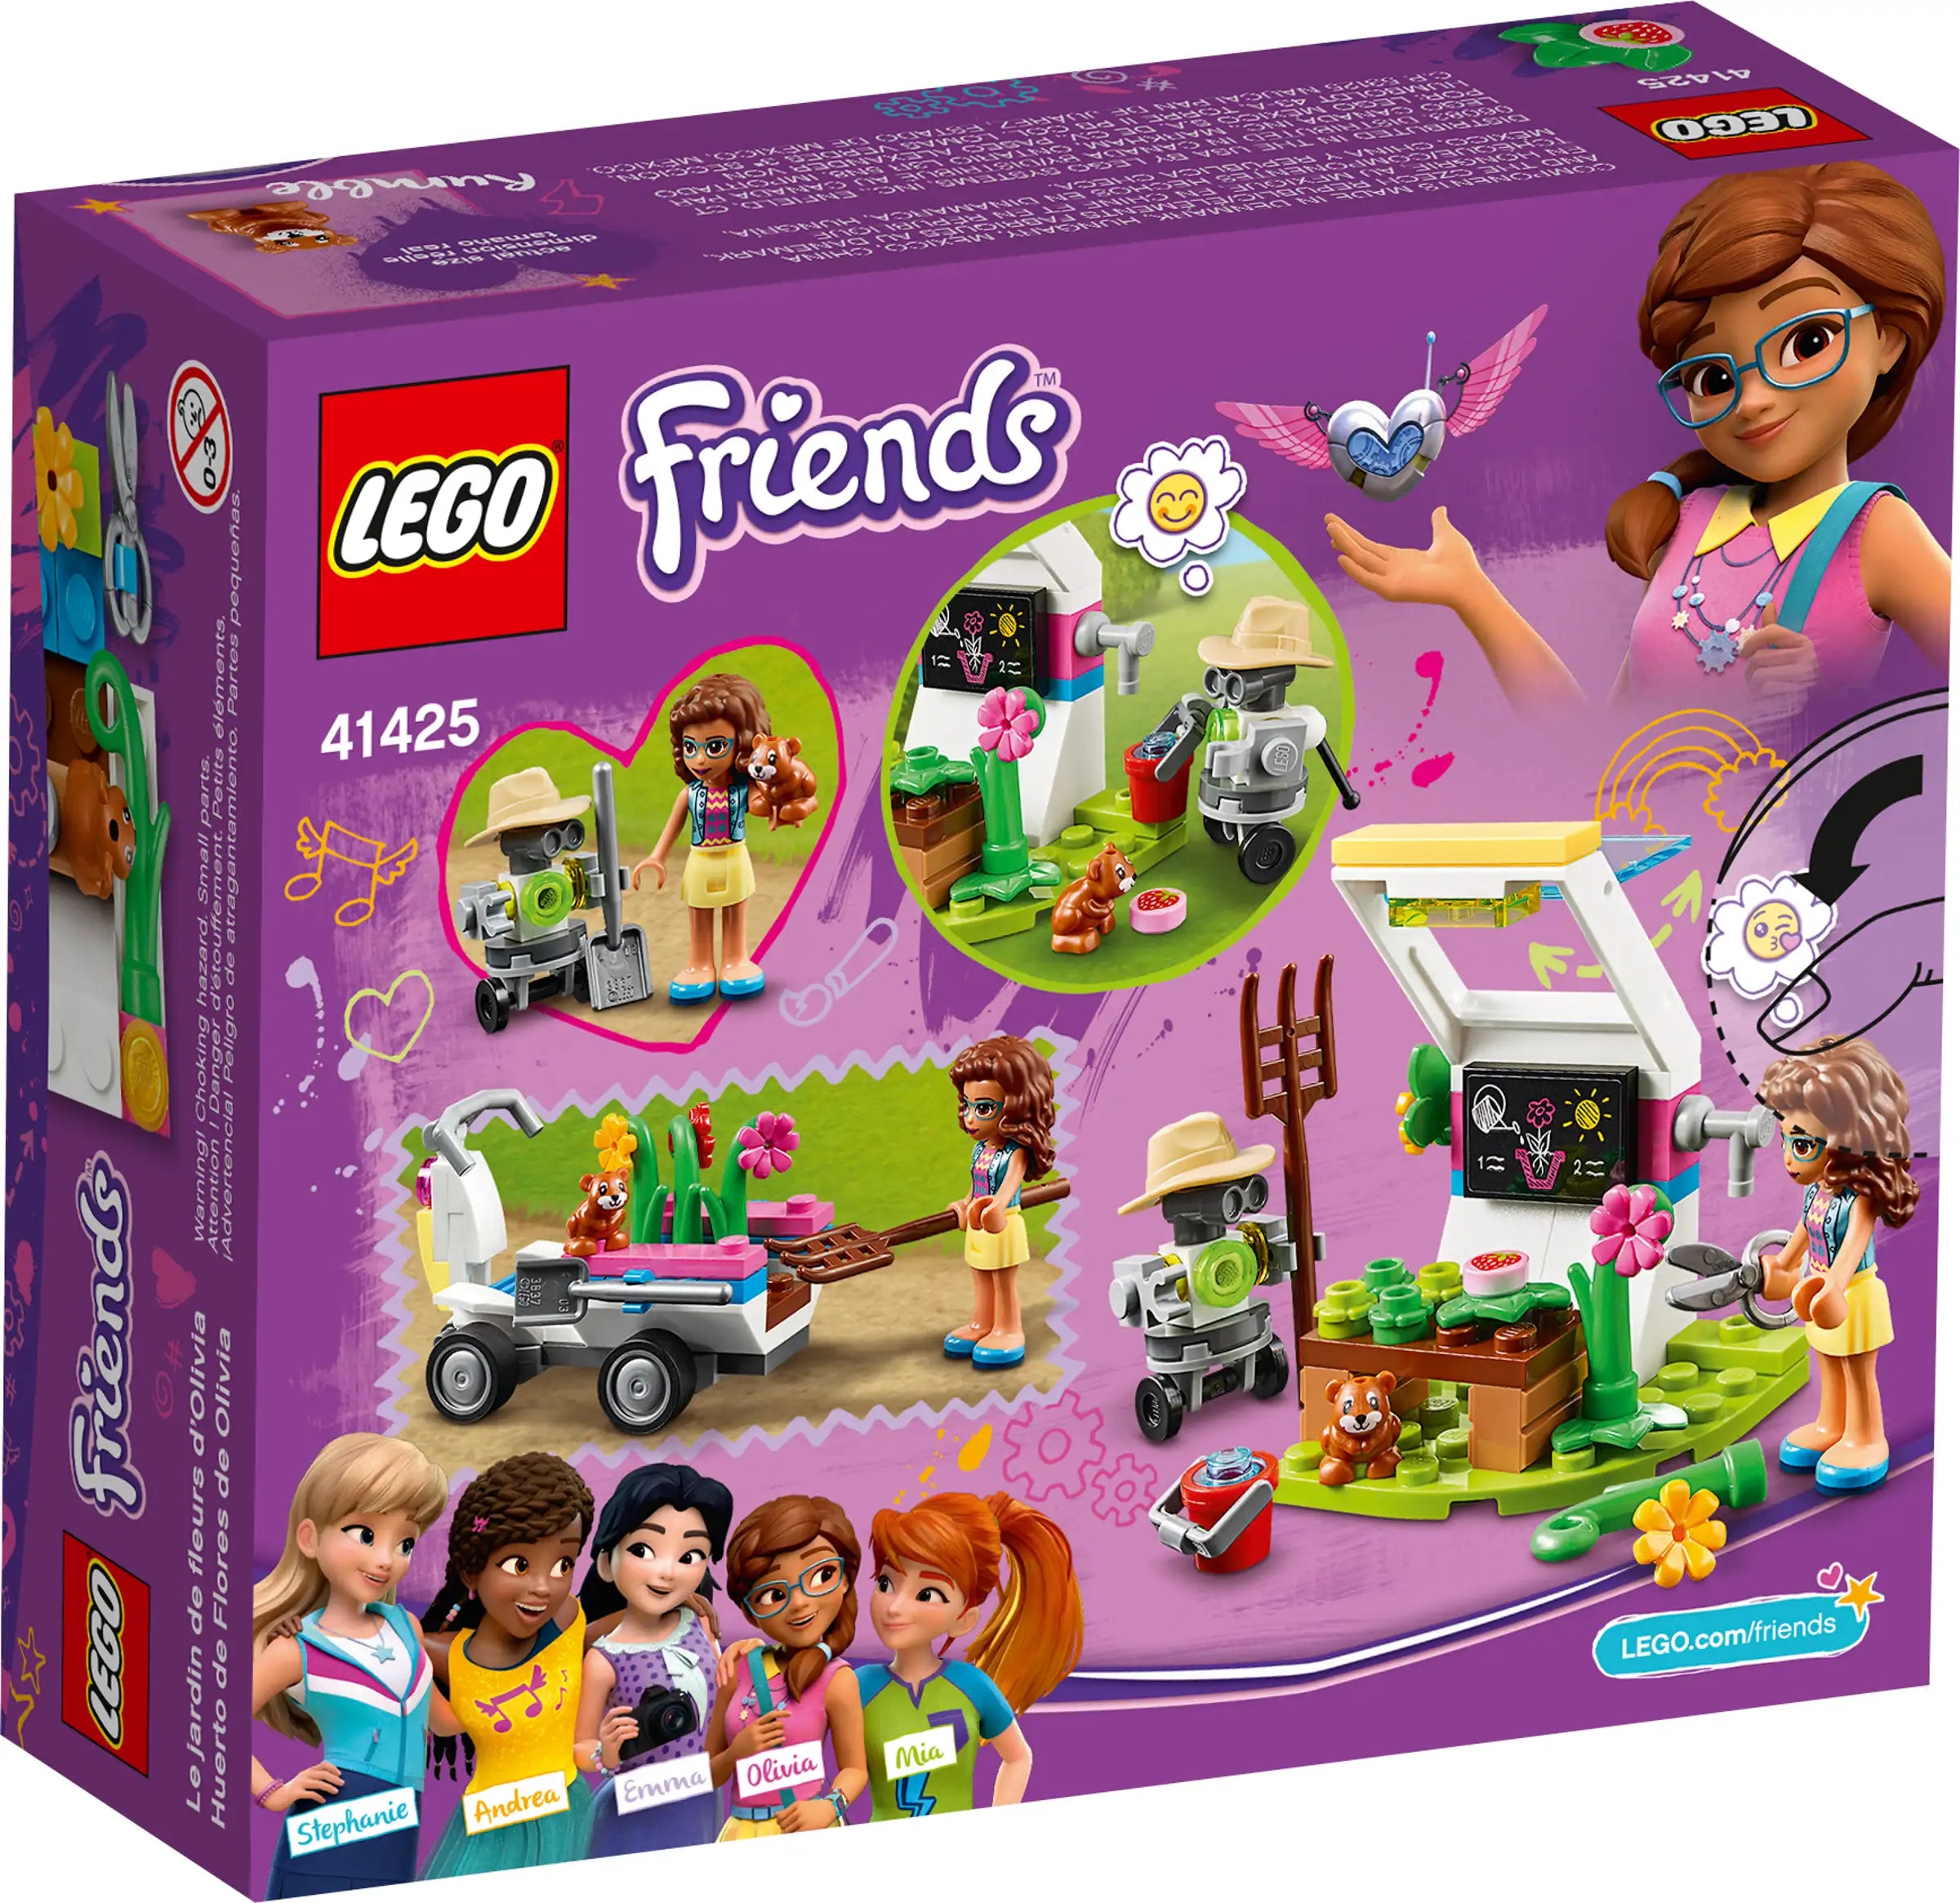 LEGO® Friends Olivia’s Flower Garden | 41425